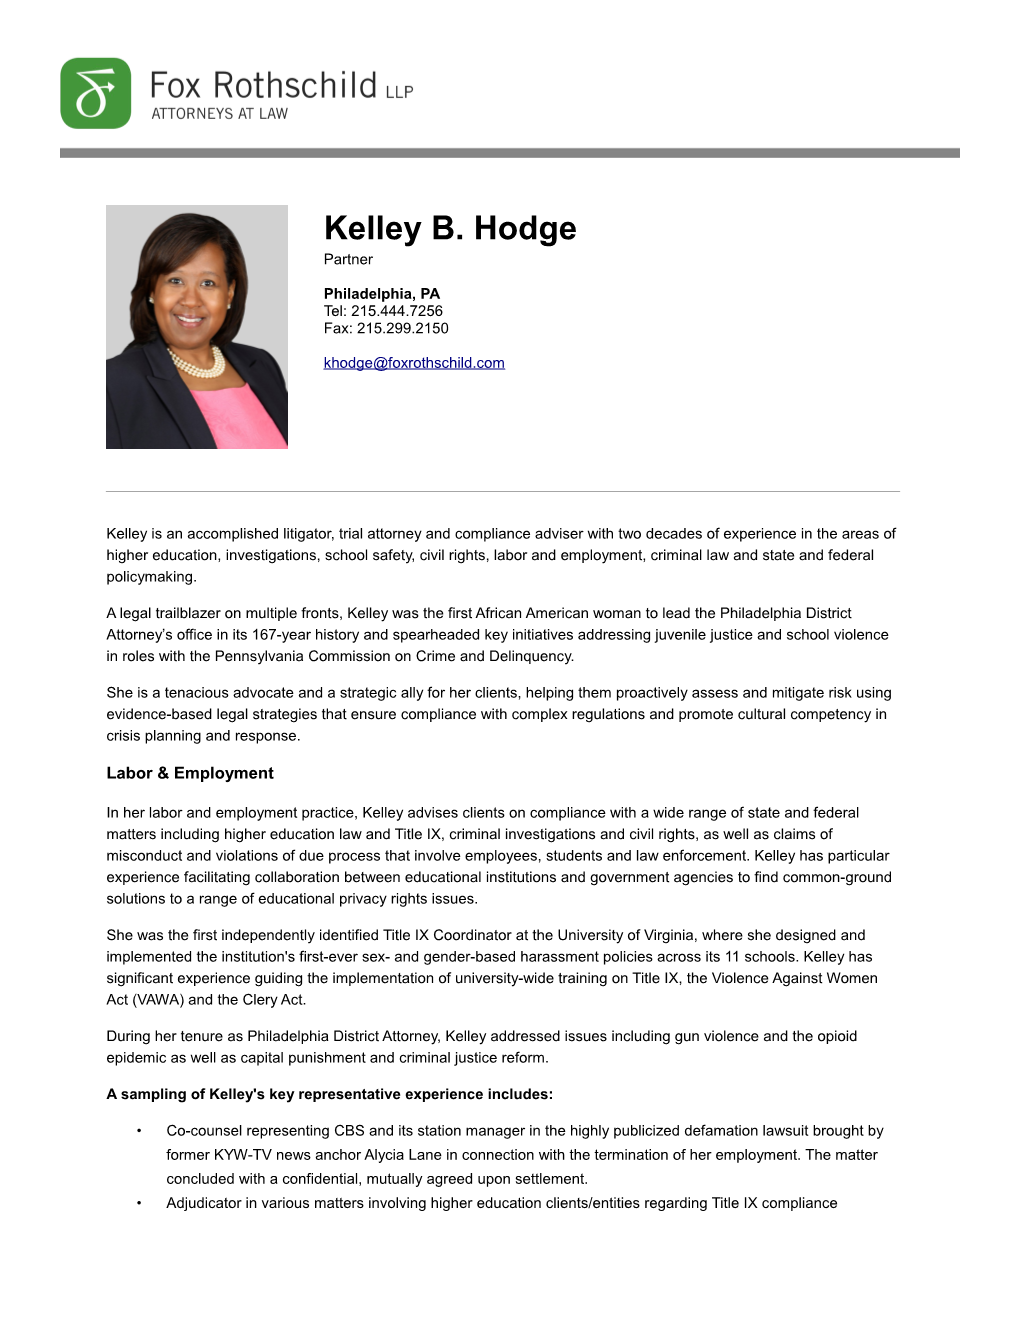 Kelley B. Hodge Partner